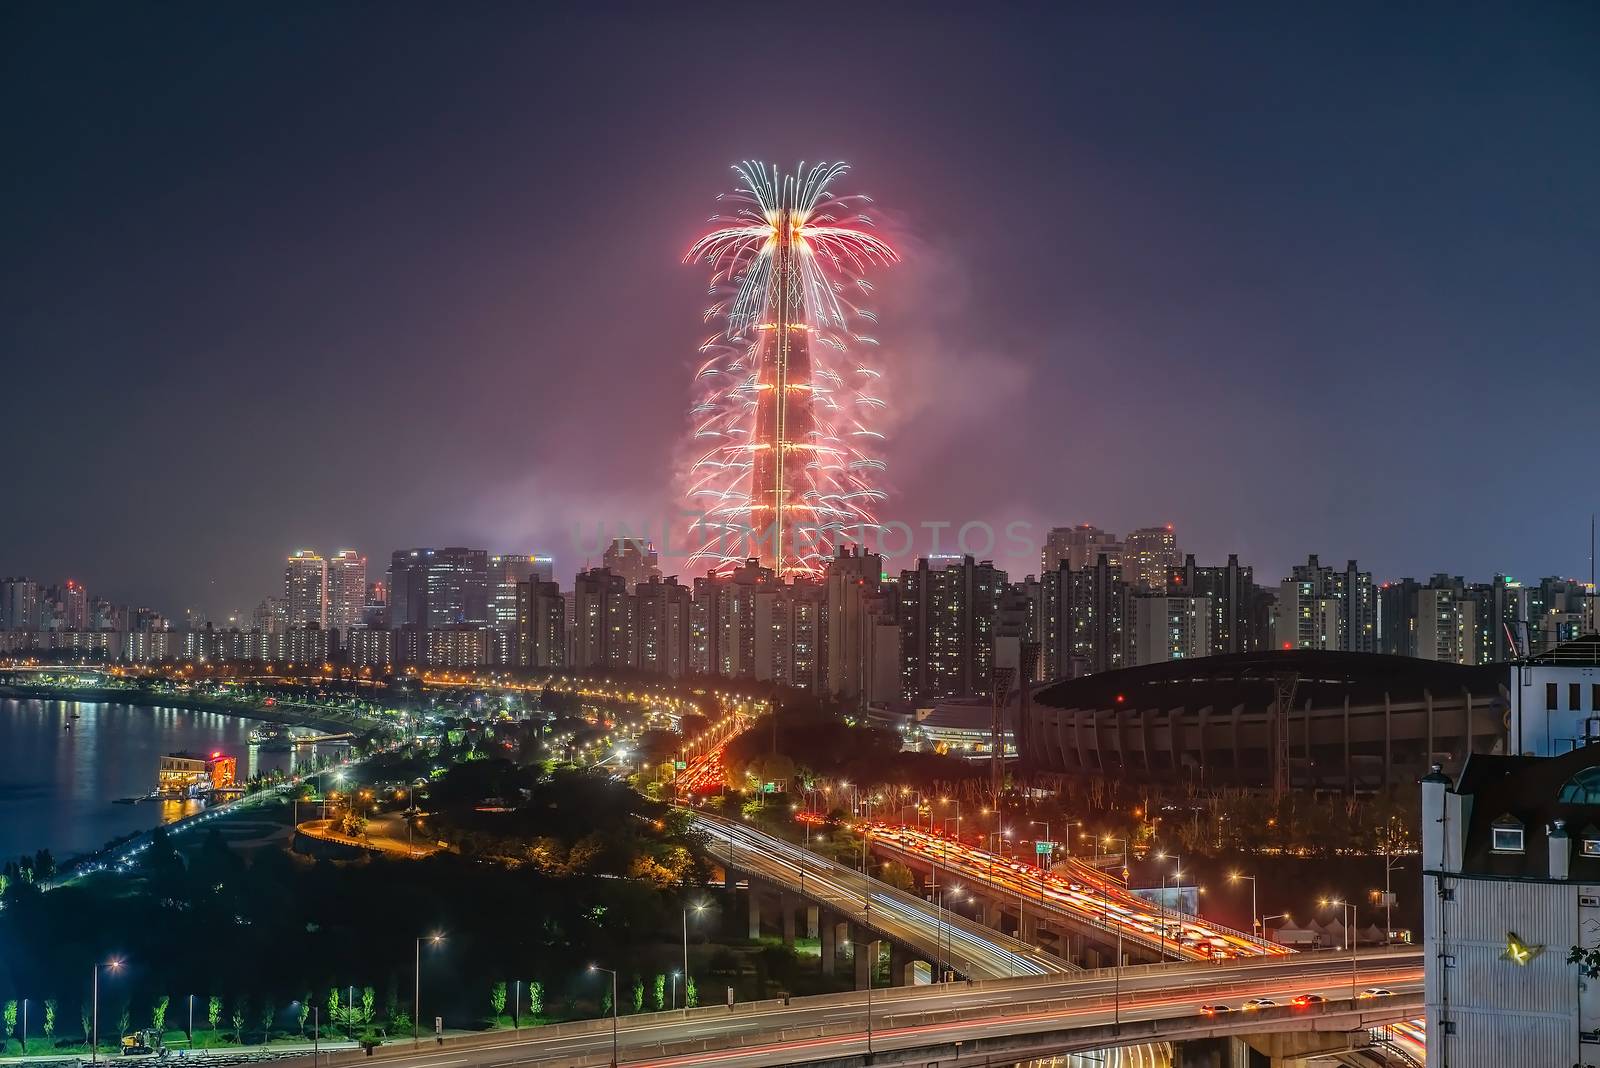 Fireworks and Seoul Festival 4 May 2019 South Korea by wijitamkapet@gmail.com